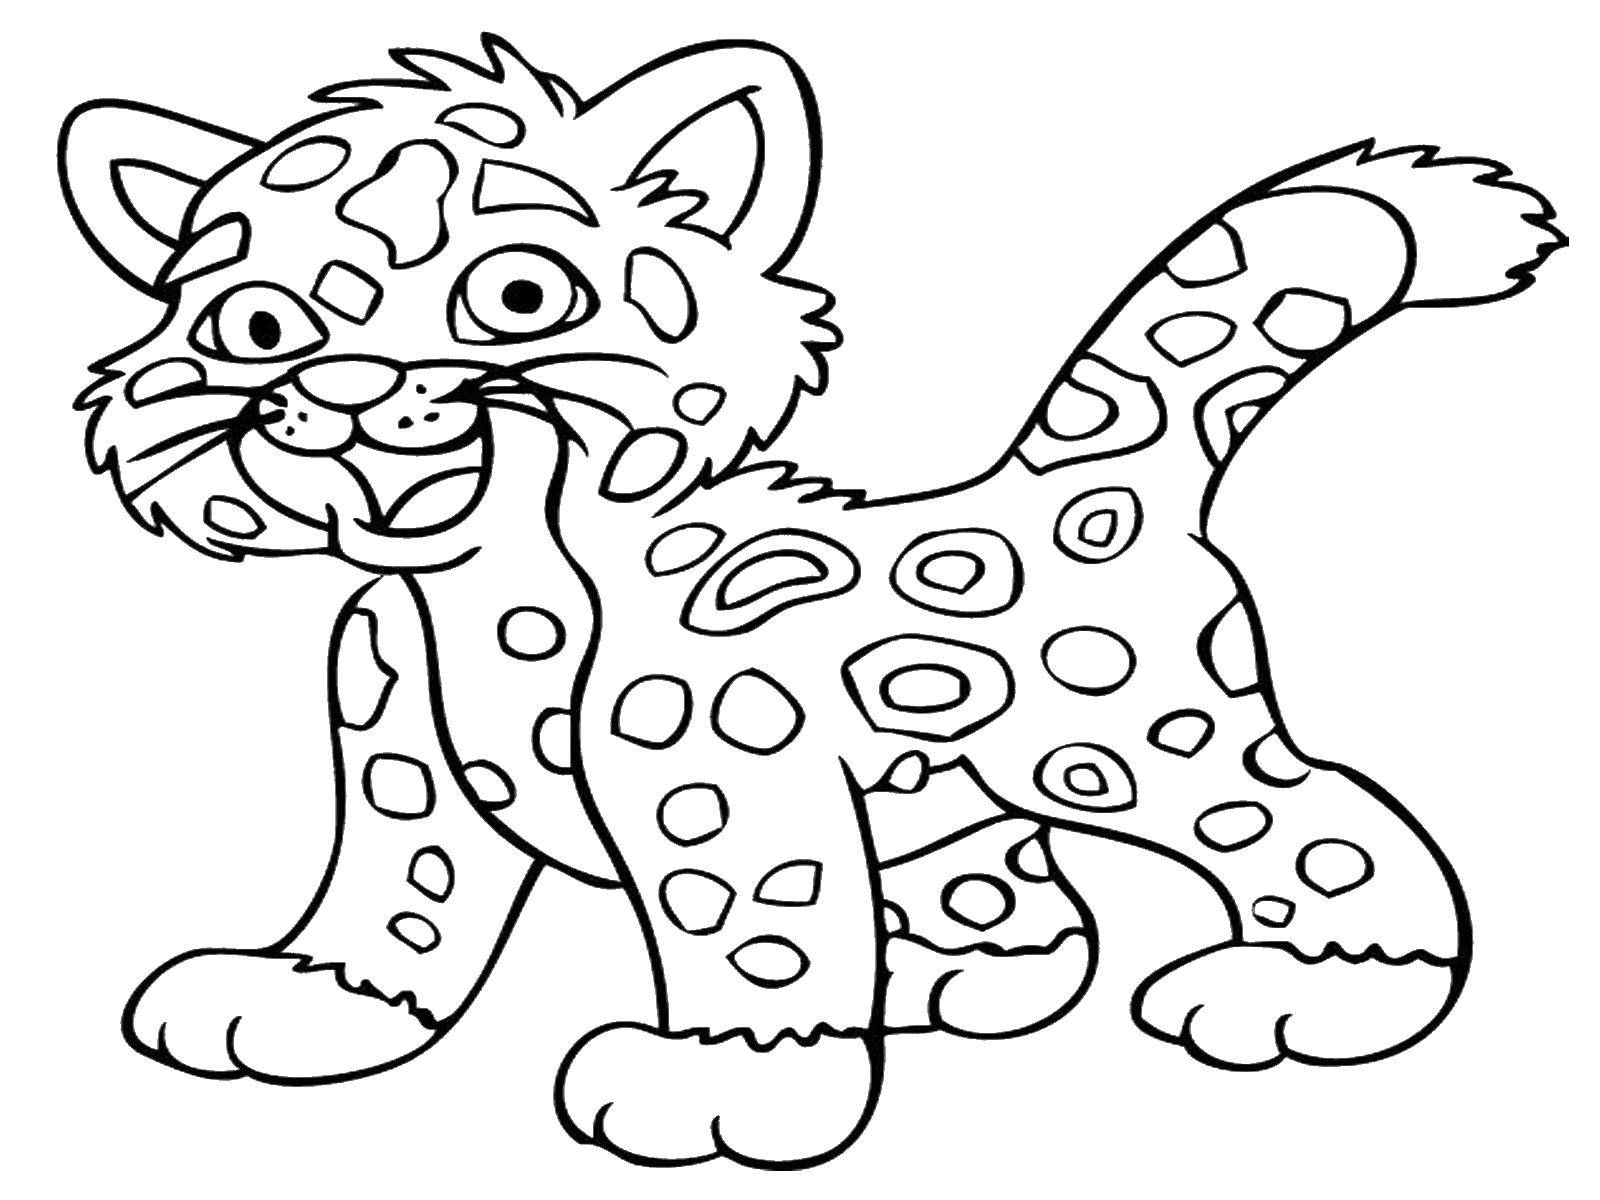 Название: Раскраска Малютка леопард. Категория: животные. Теги: животные, леопард.